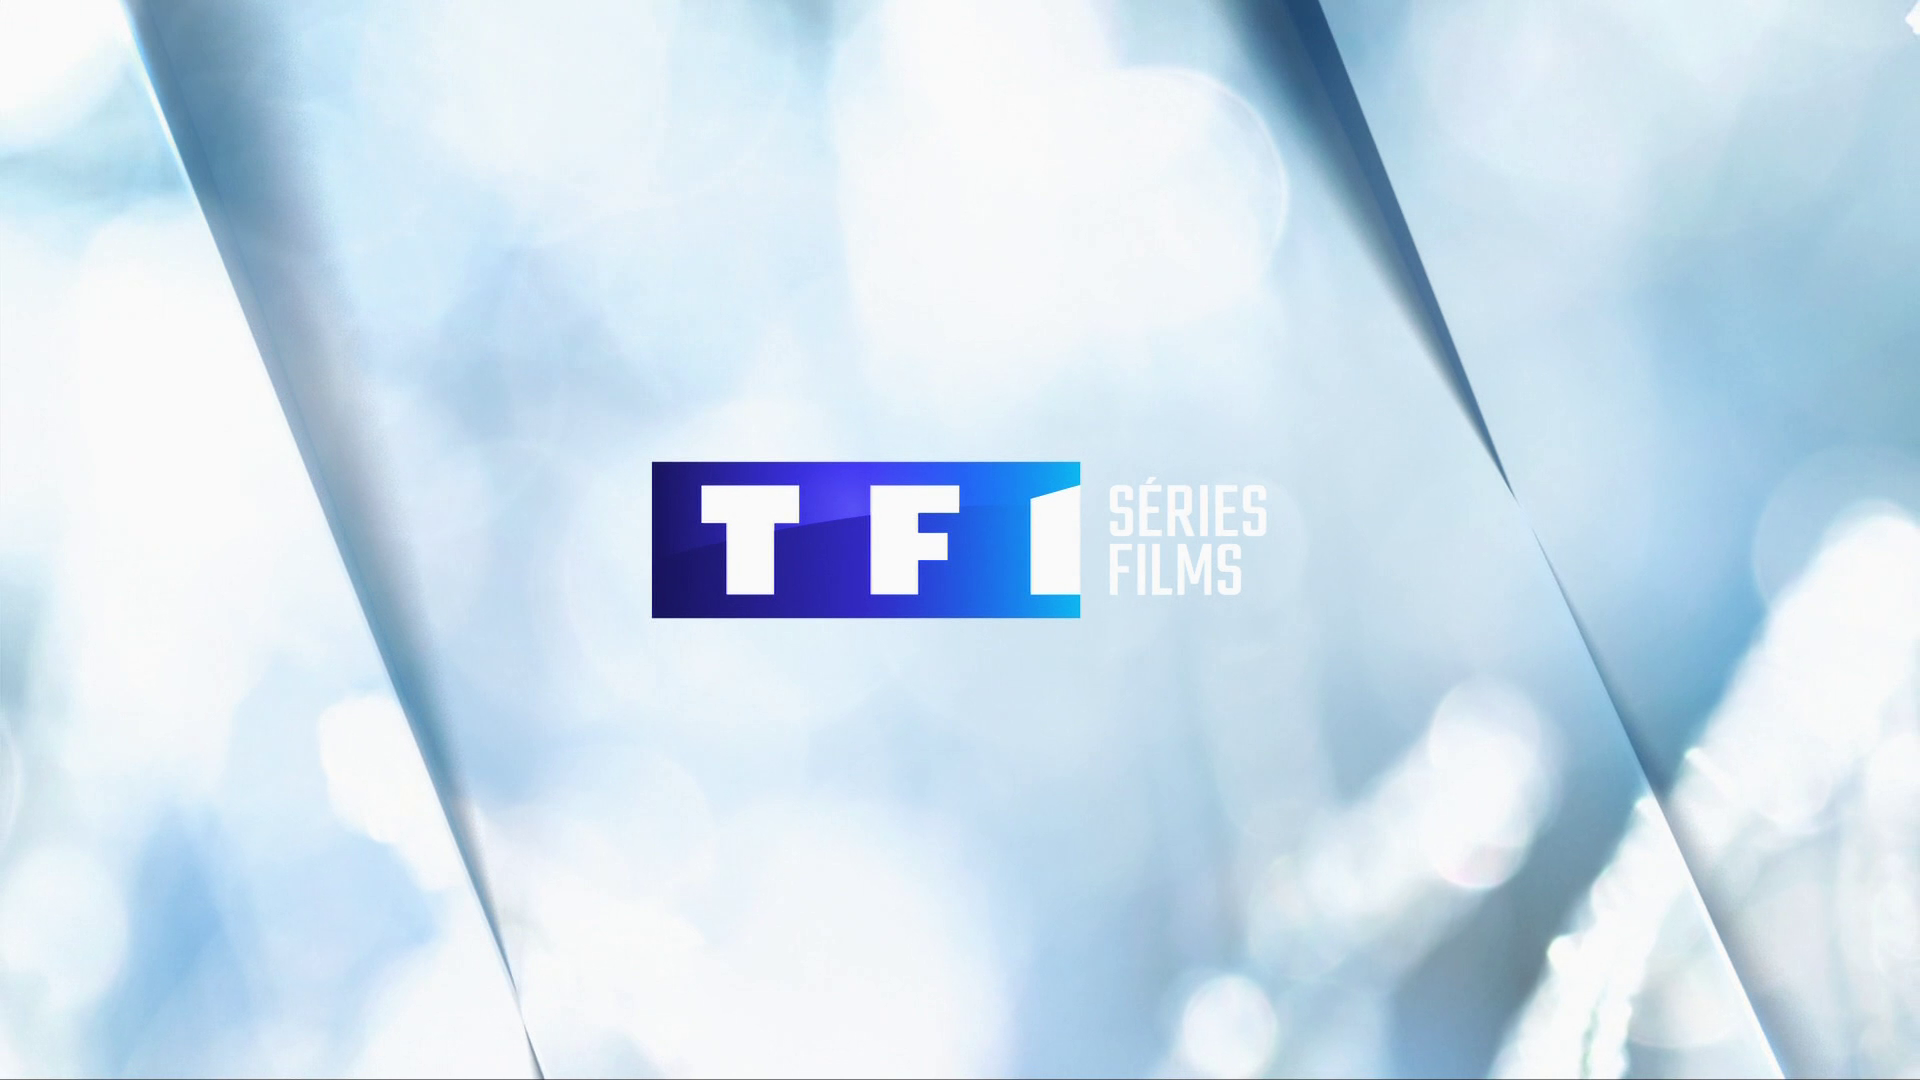 Vidéo Jingle De Transition Tf1 Séries Films 2018